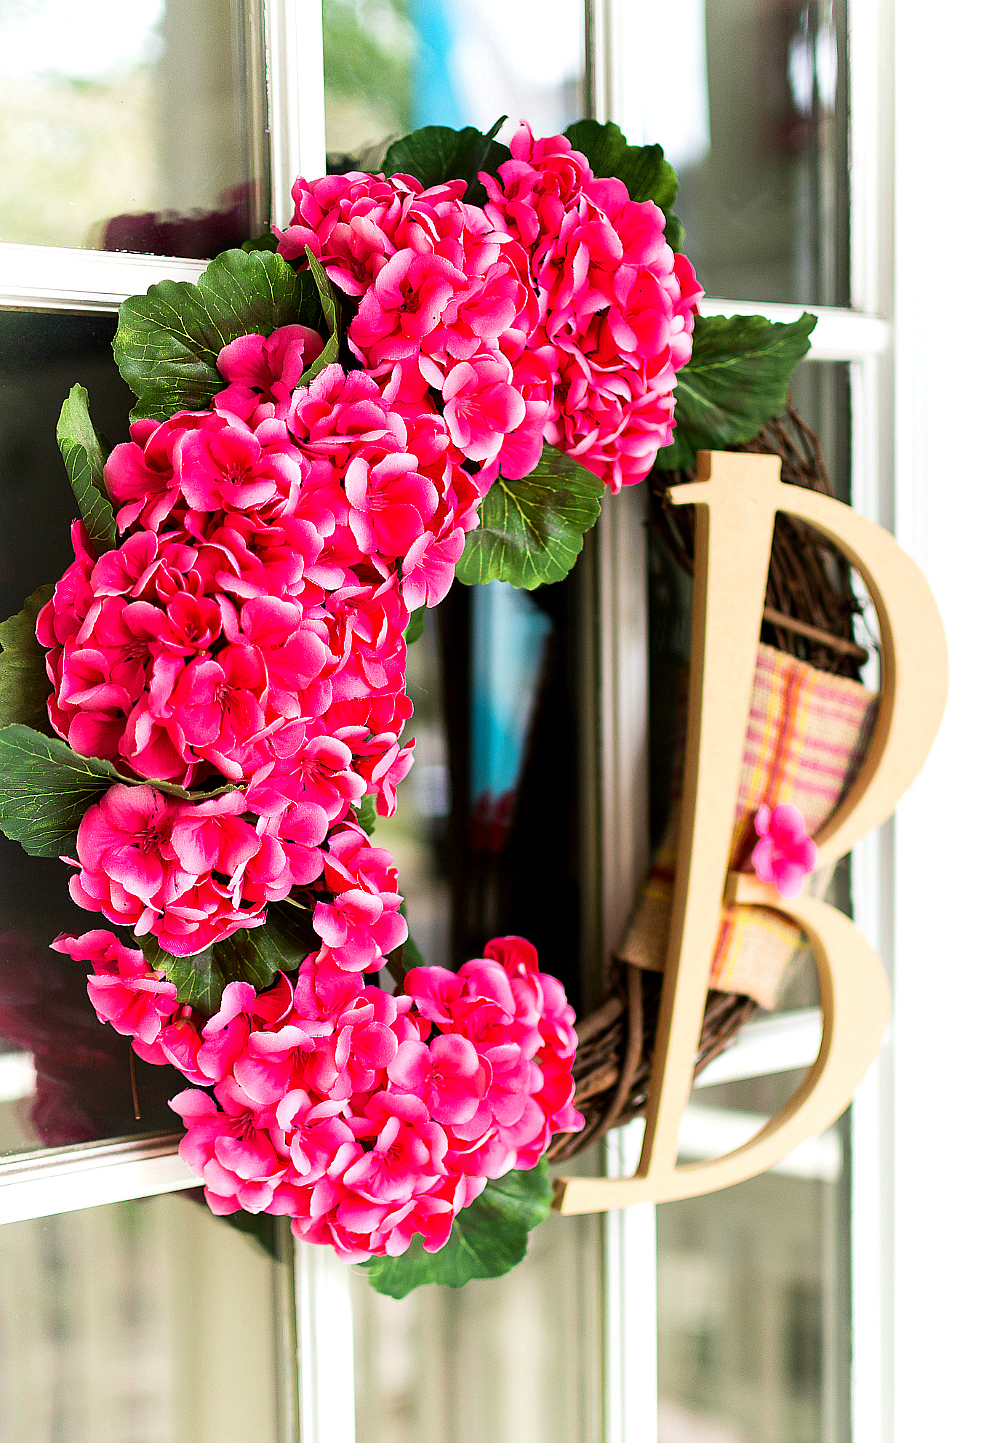 Geranium Monogram Wreath - Pink Wreath Ideas - Monogram Wreath Ideas for Spring with Geraniums - DIY Tutorial